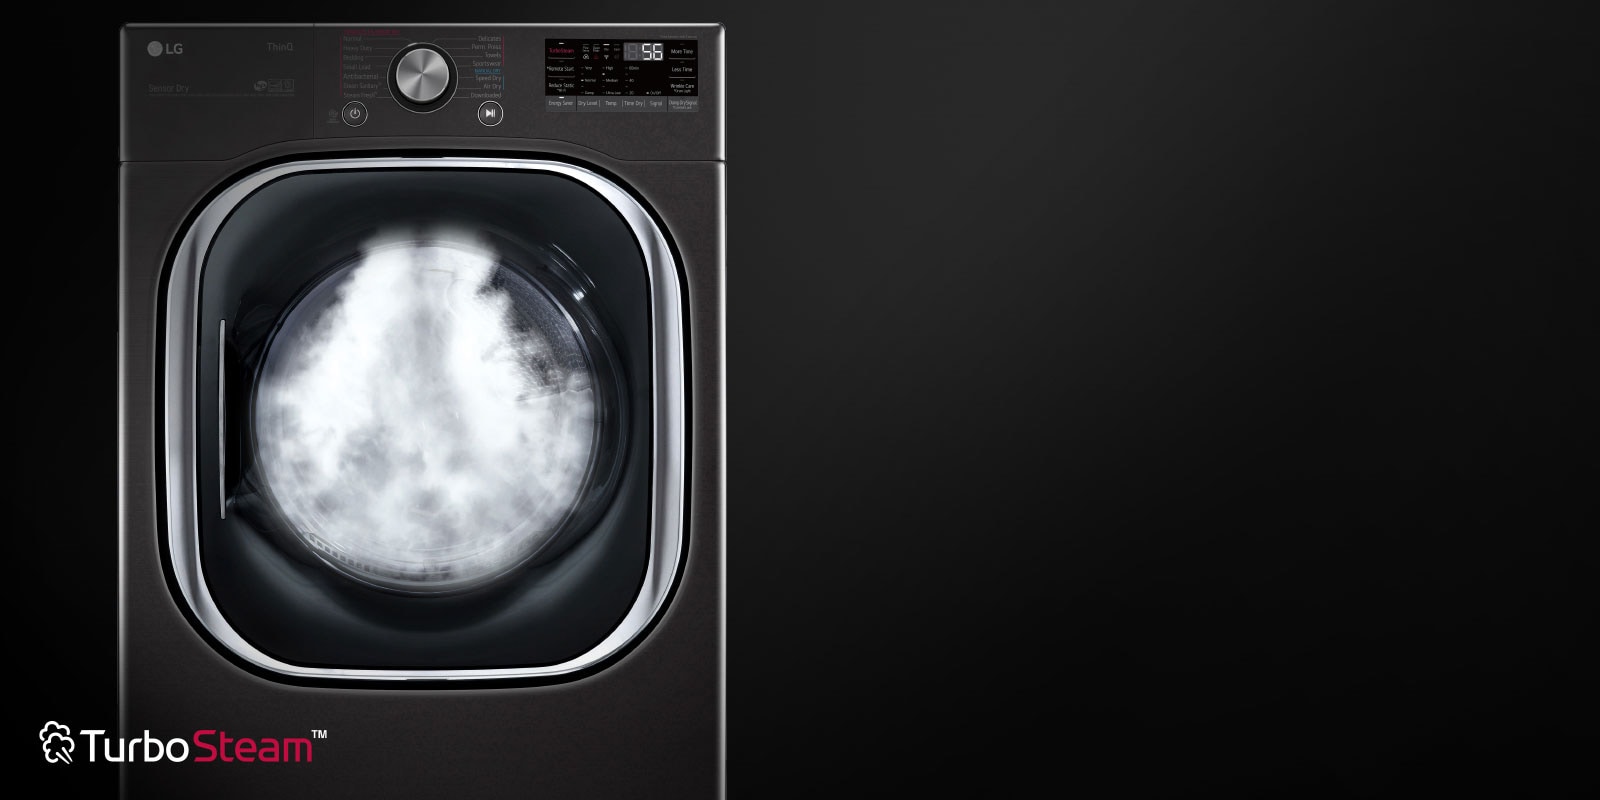 Dryer showcasing TurboSteam™ technology feature